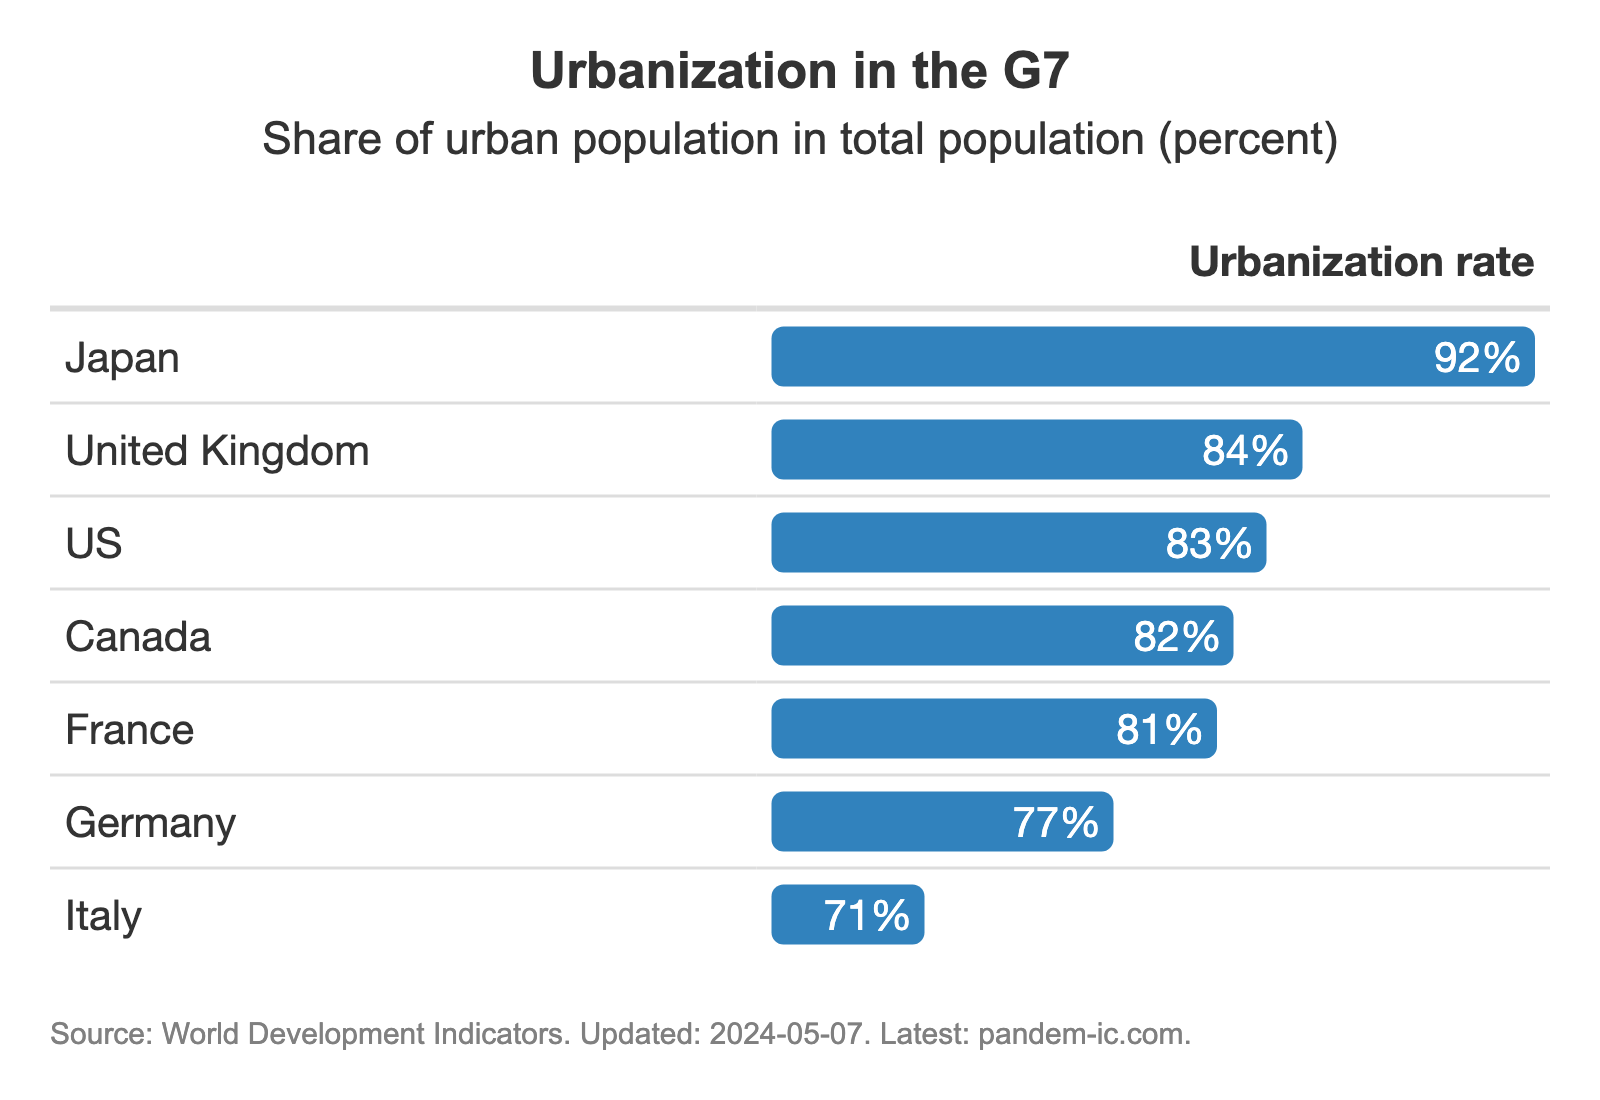 G7 urbanization rates